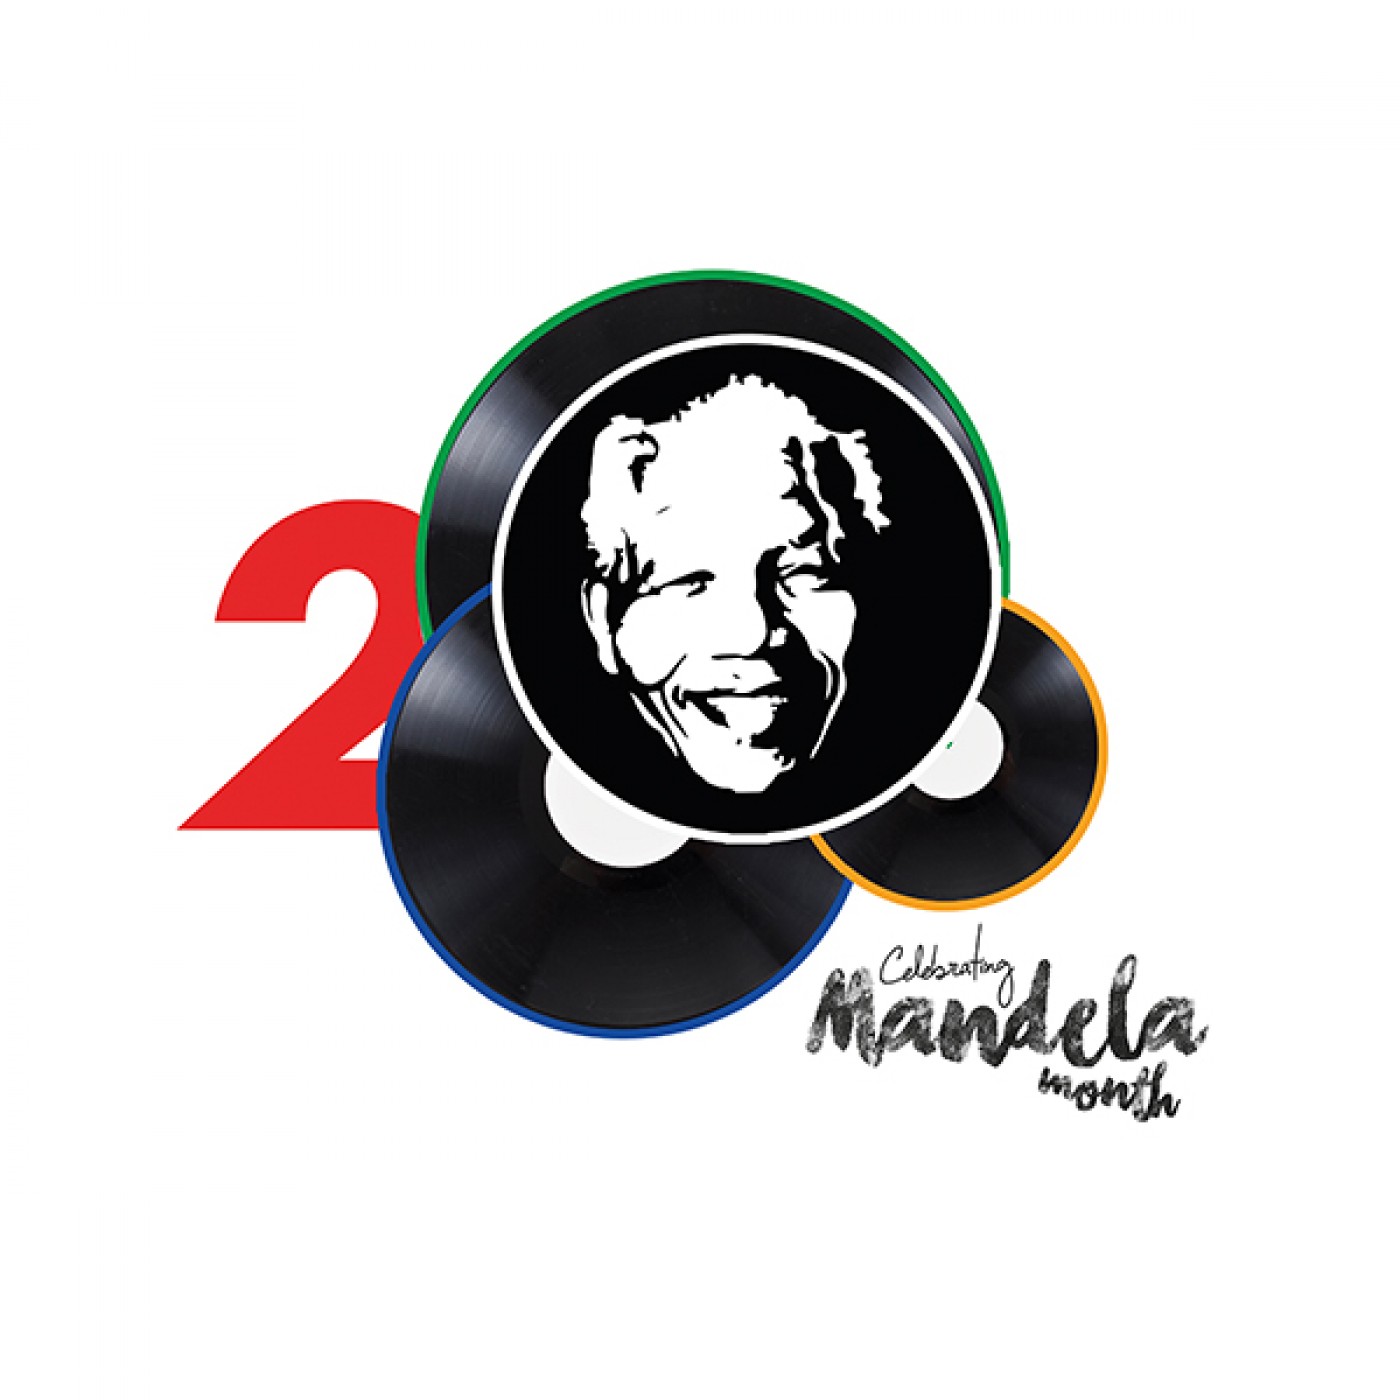 Radio 2000 promotes the Madiba Values - the values of ubuntu 10